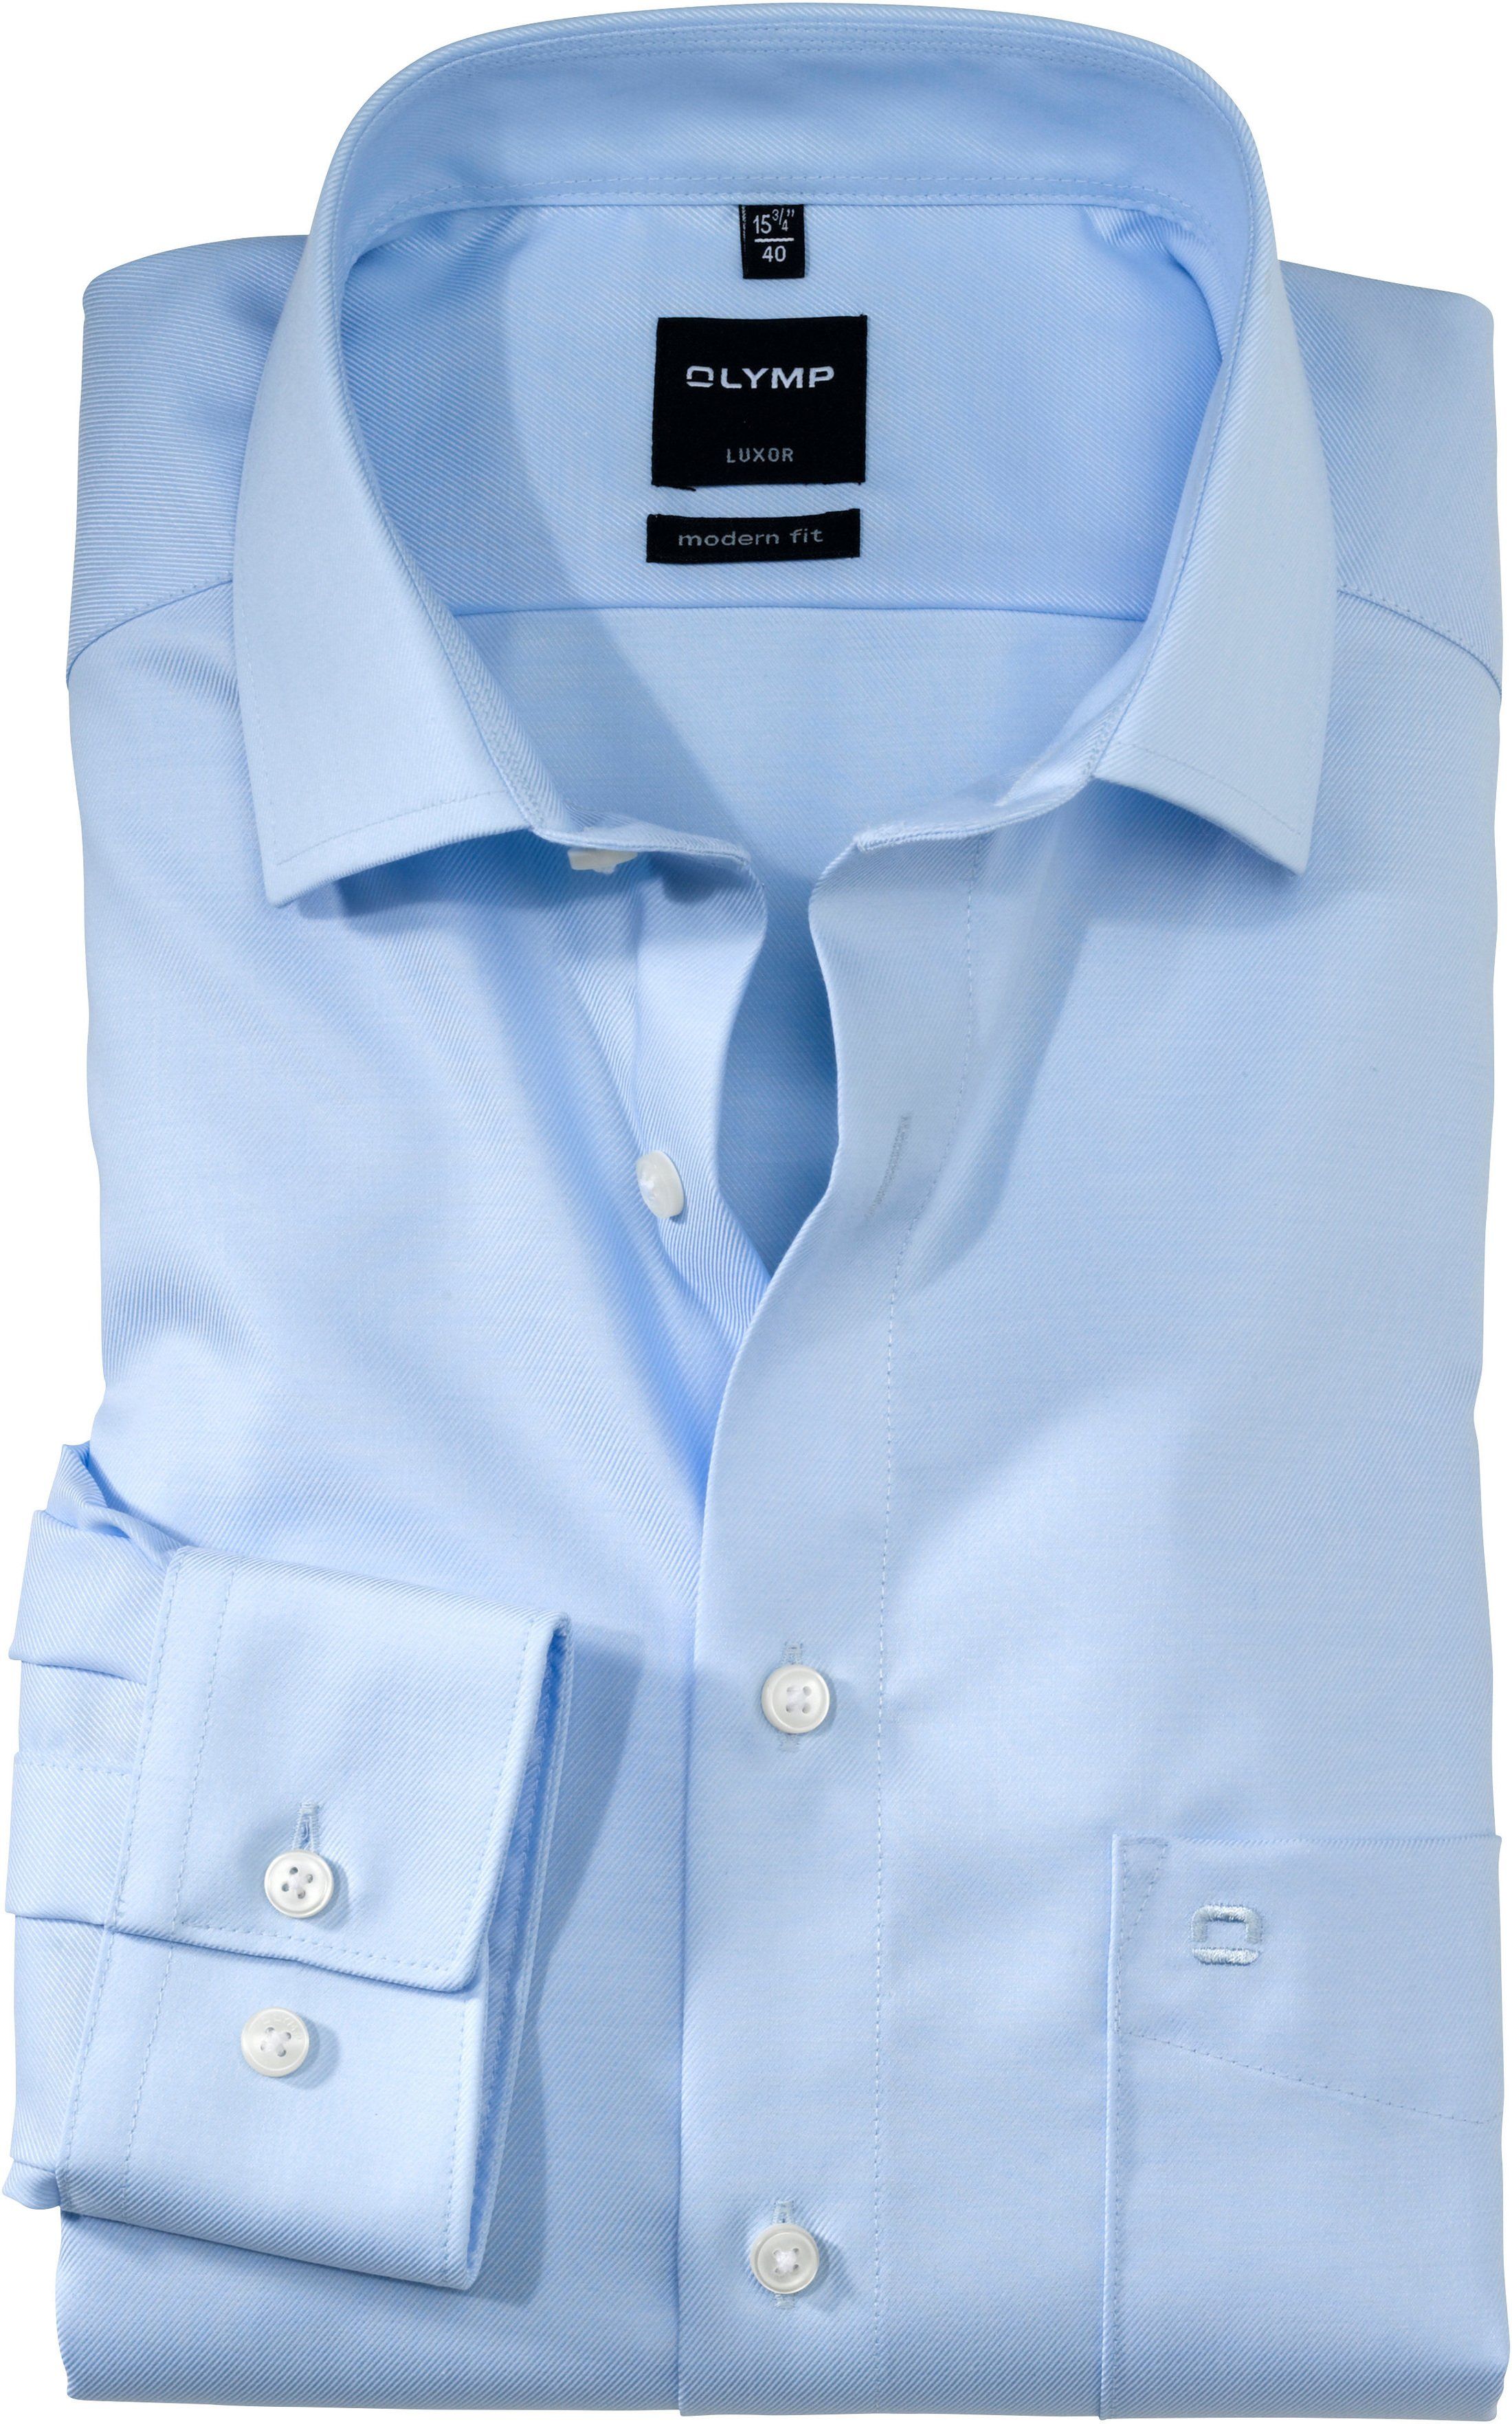 OLYMP Cotton Shirt Luxor Blue size 14.5